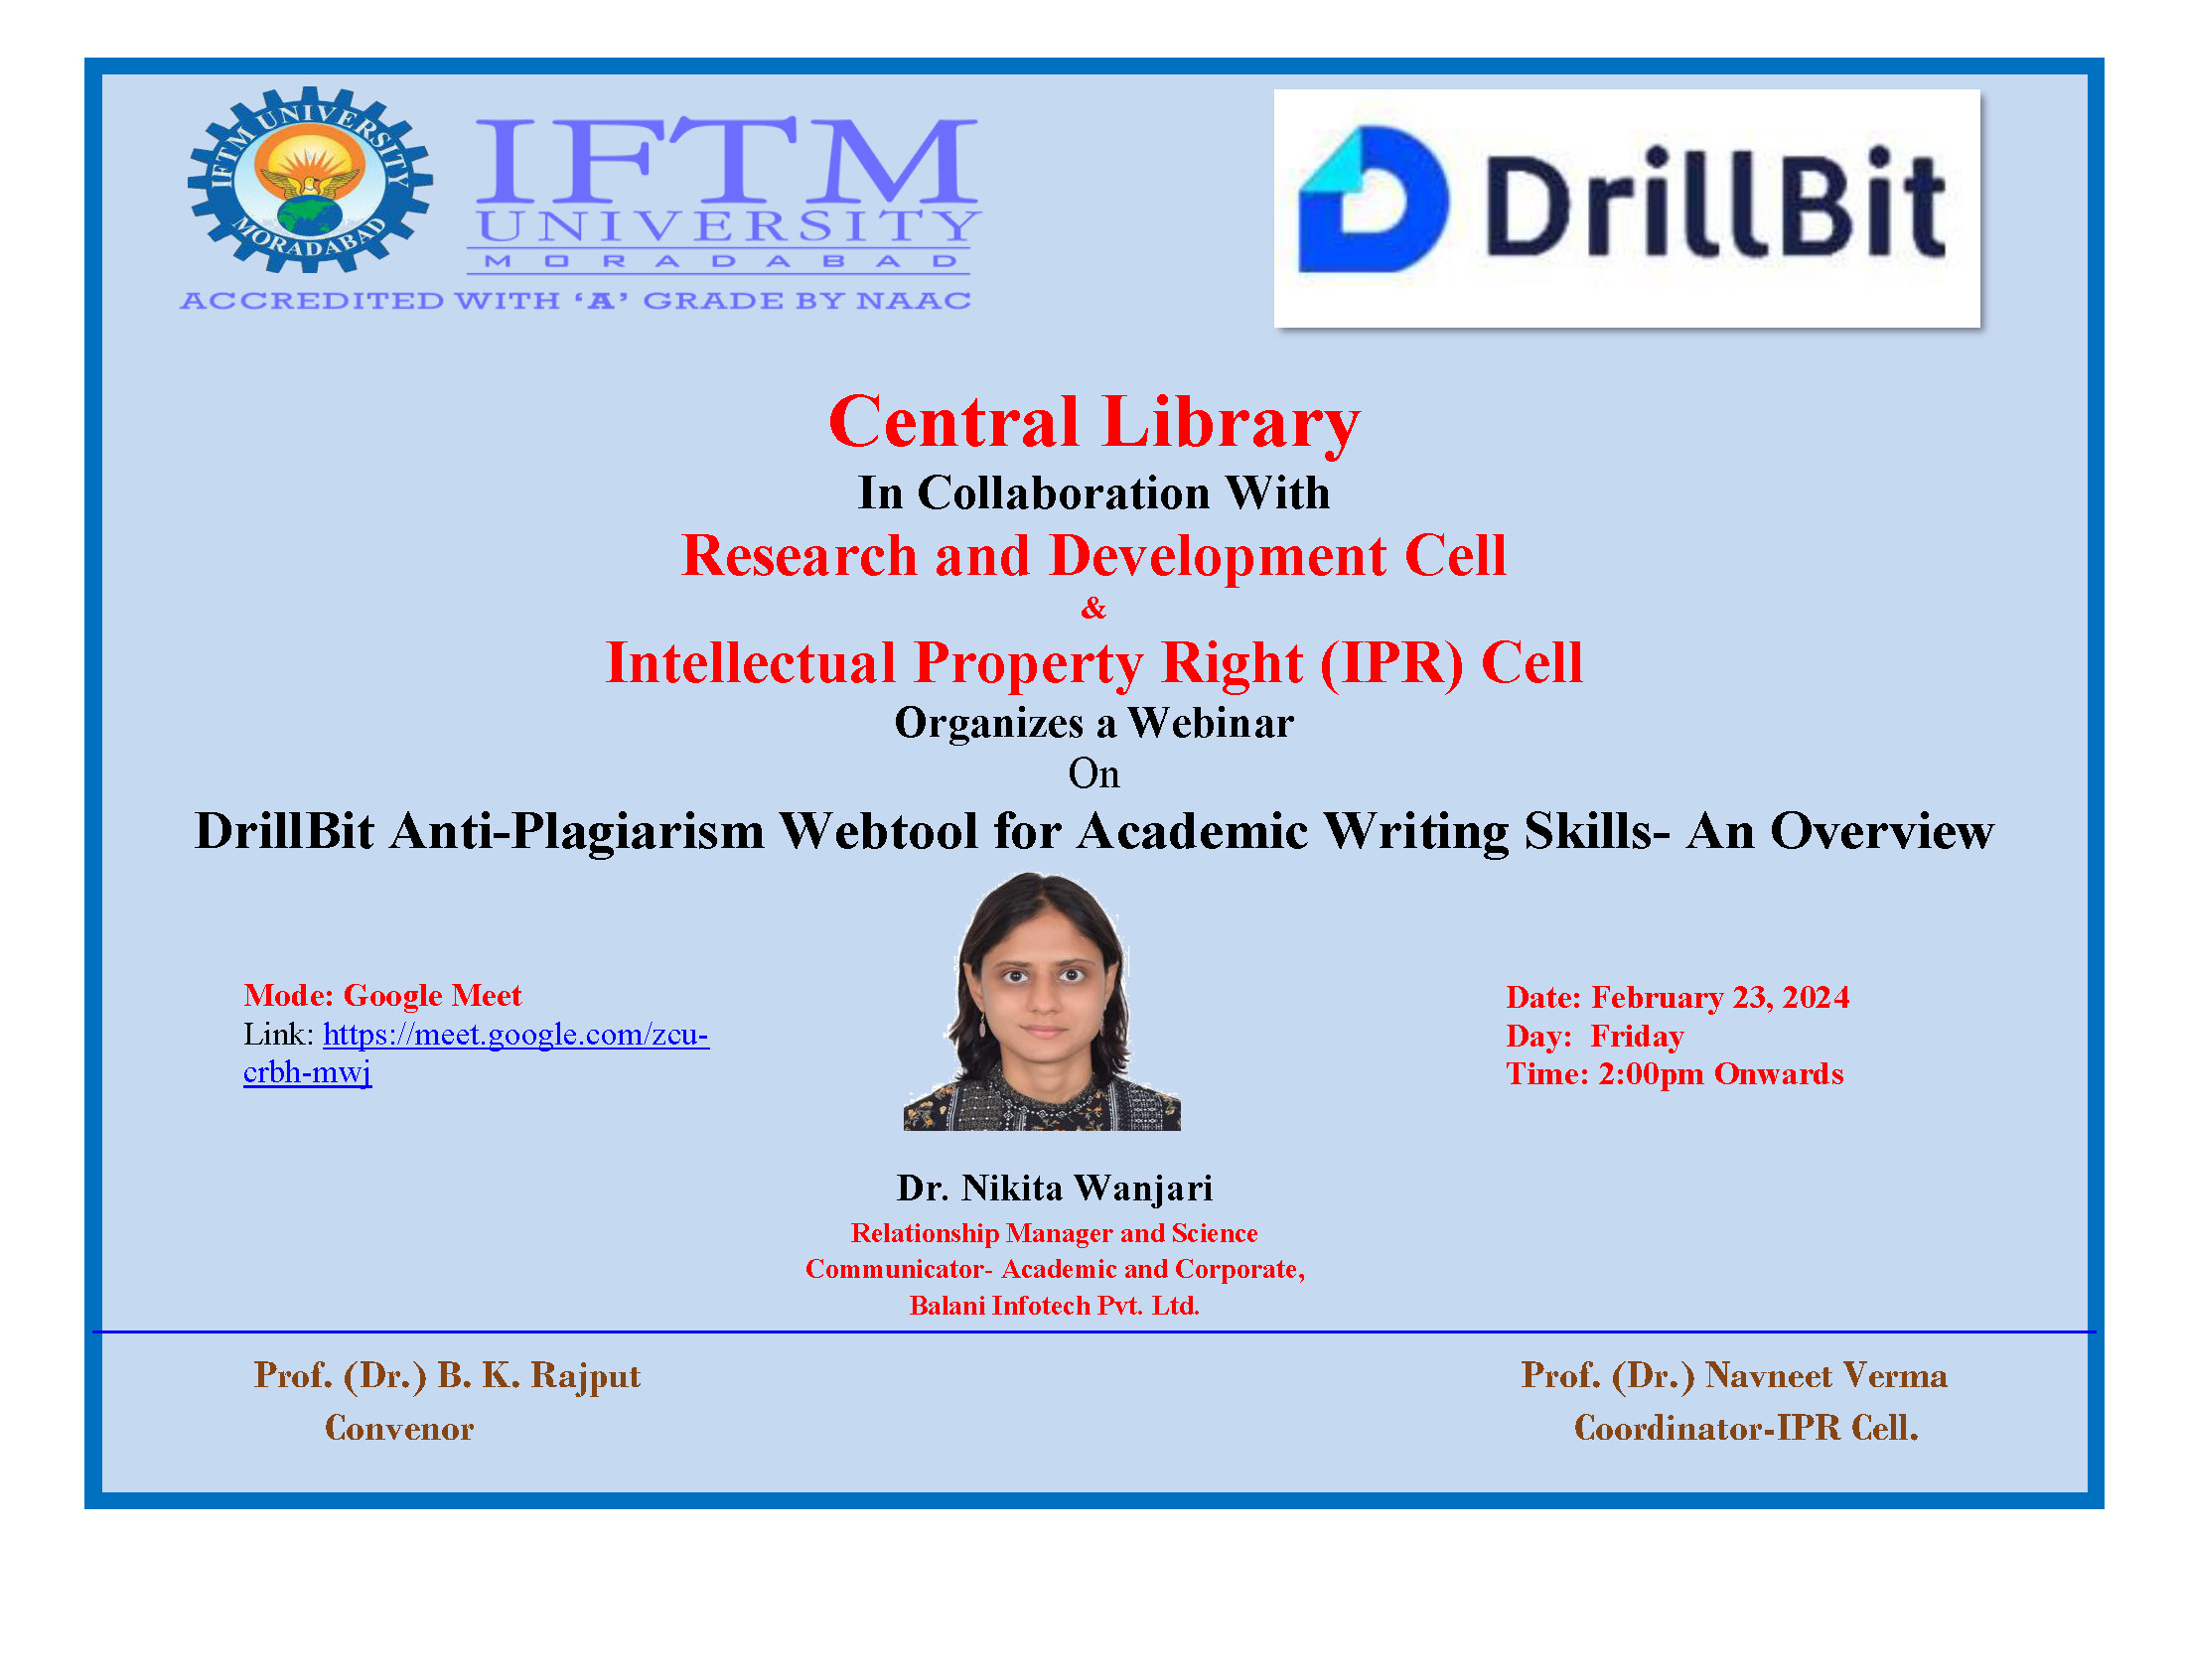 A Webinar on DrillBit Anti-Plagiarism Webtool for Academic Writing Skills- An Overview